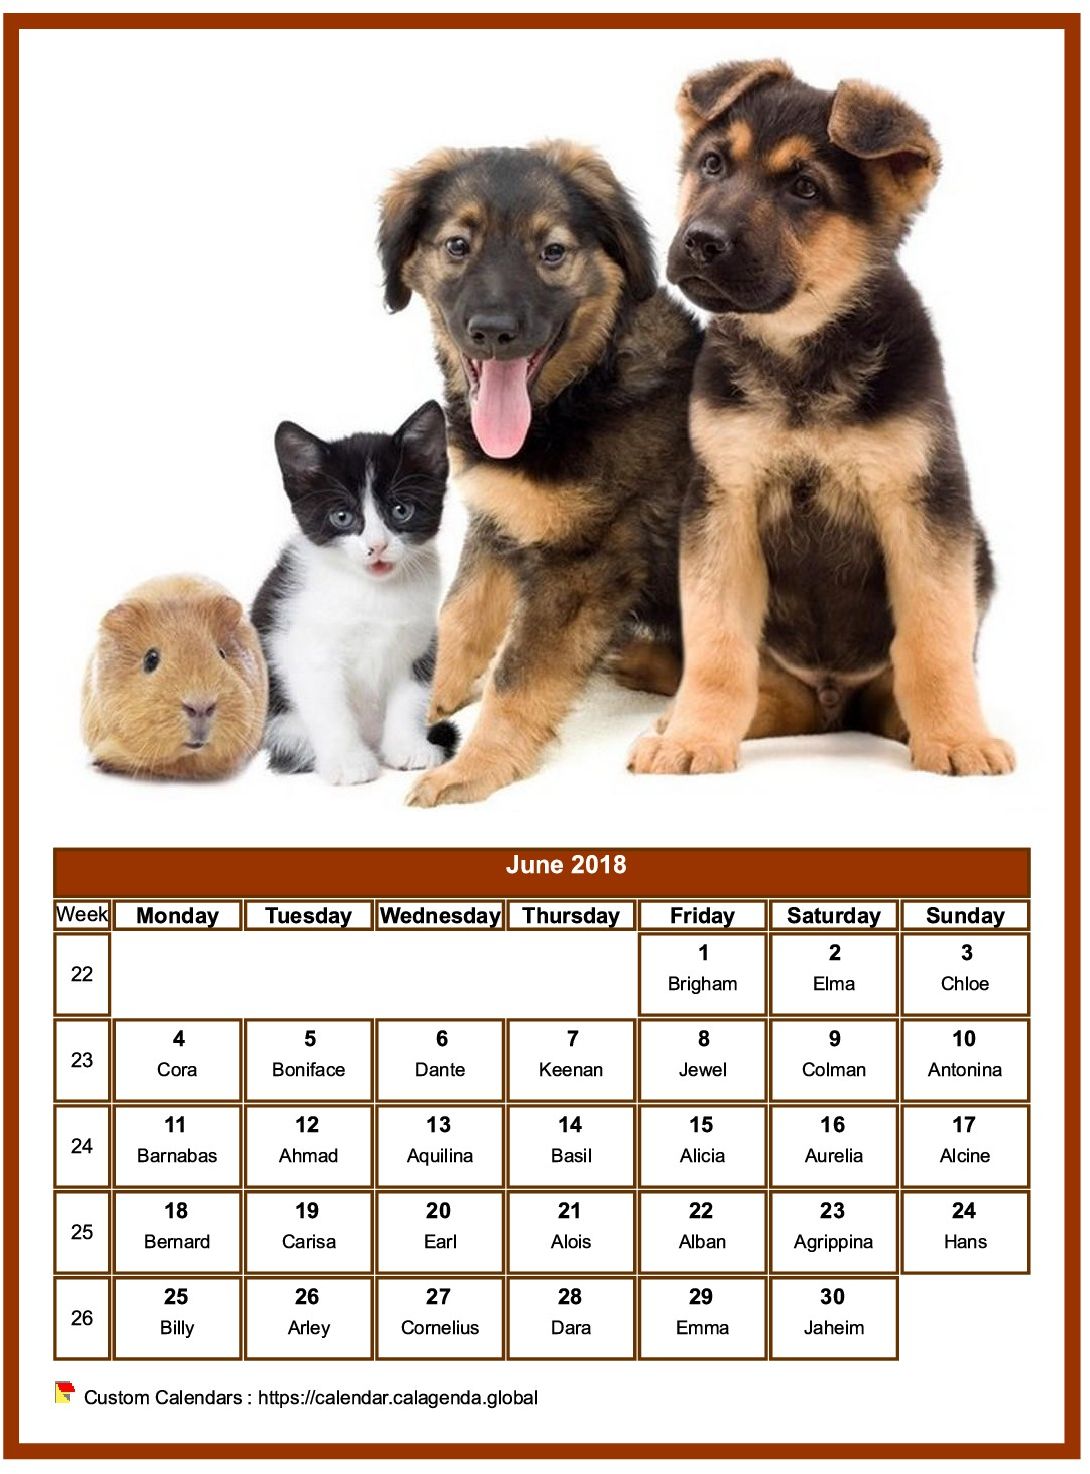 Calendar June 2018 dogs